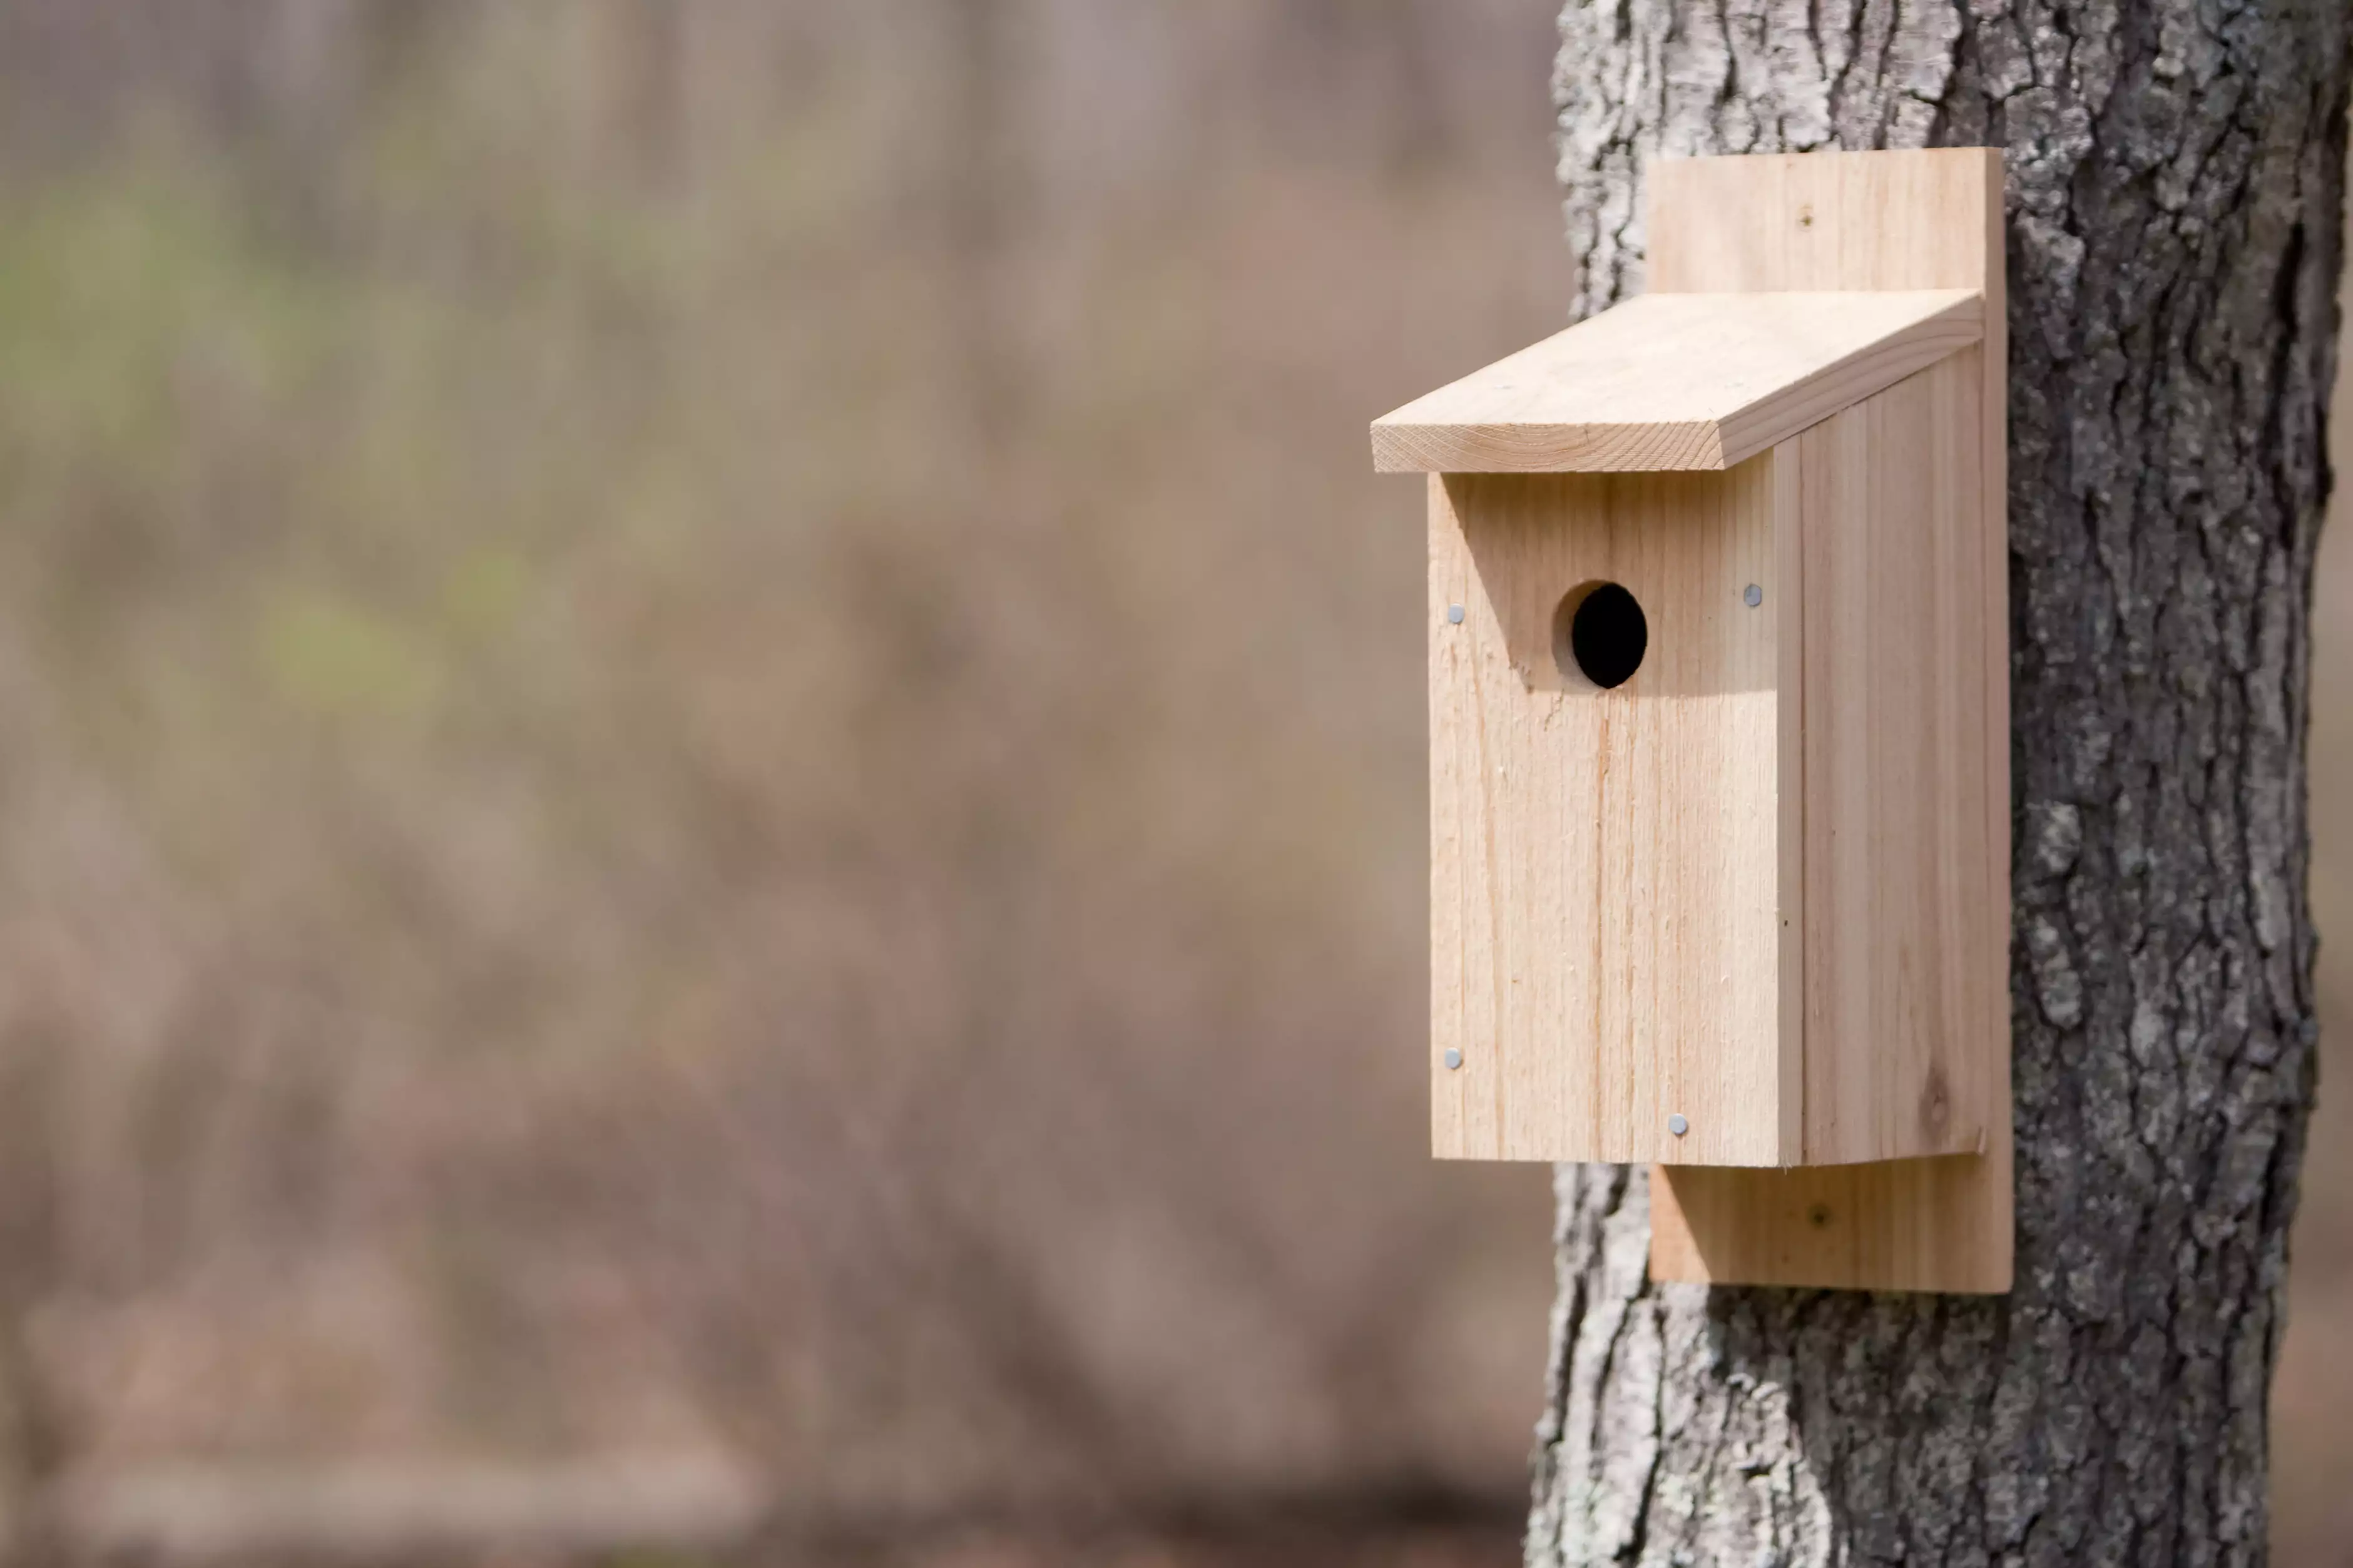 Bluebird nesting box